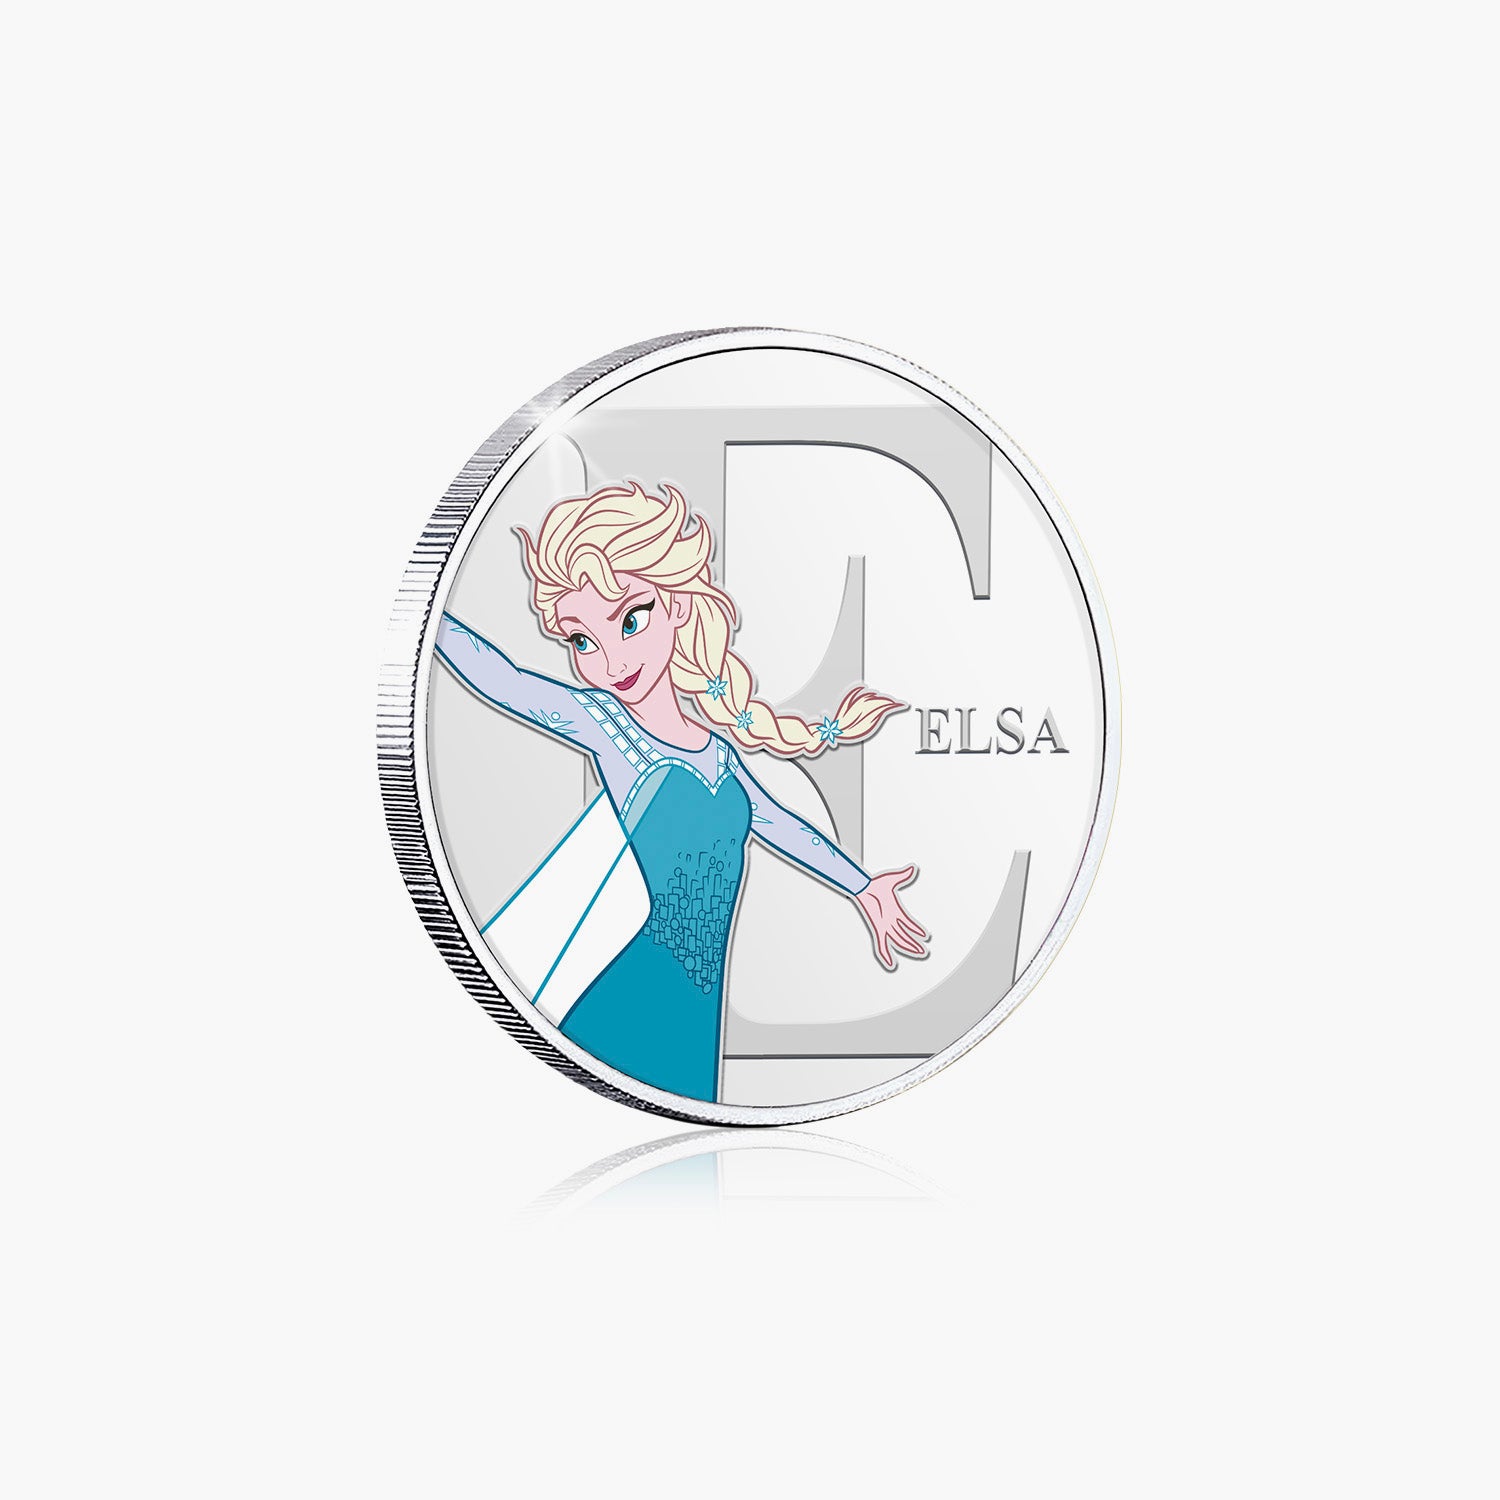 E is for Elsa Silver-Plated Full Colour Commemorative